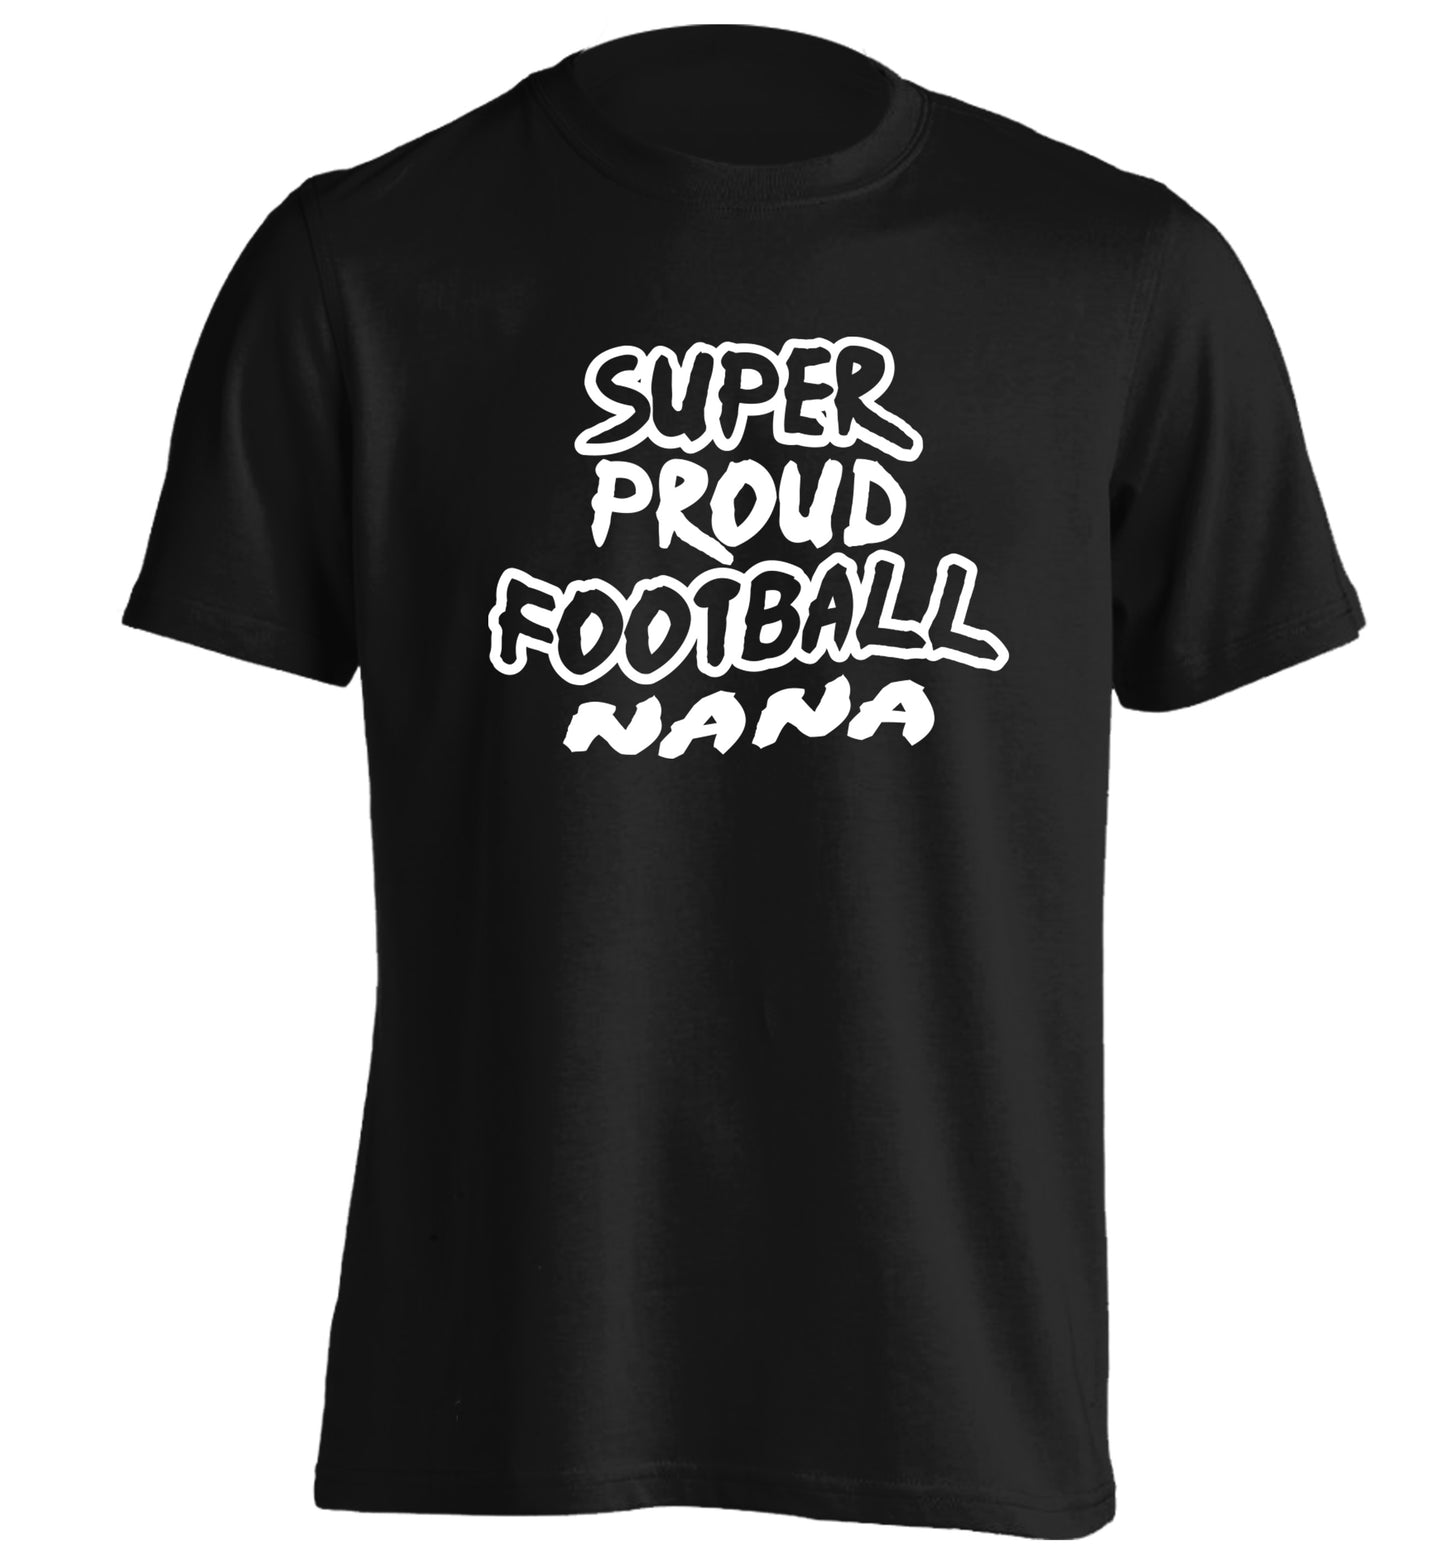 Super proud football nana adults unisexblack Tshirt 2XL